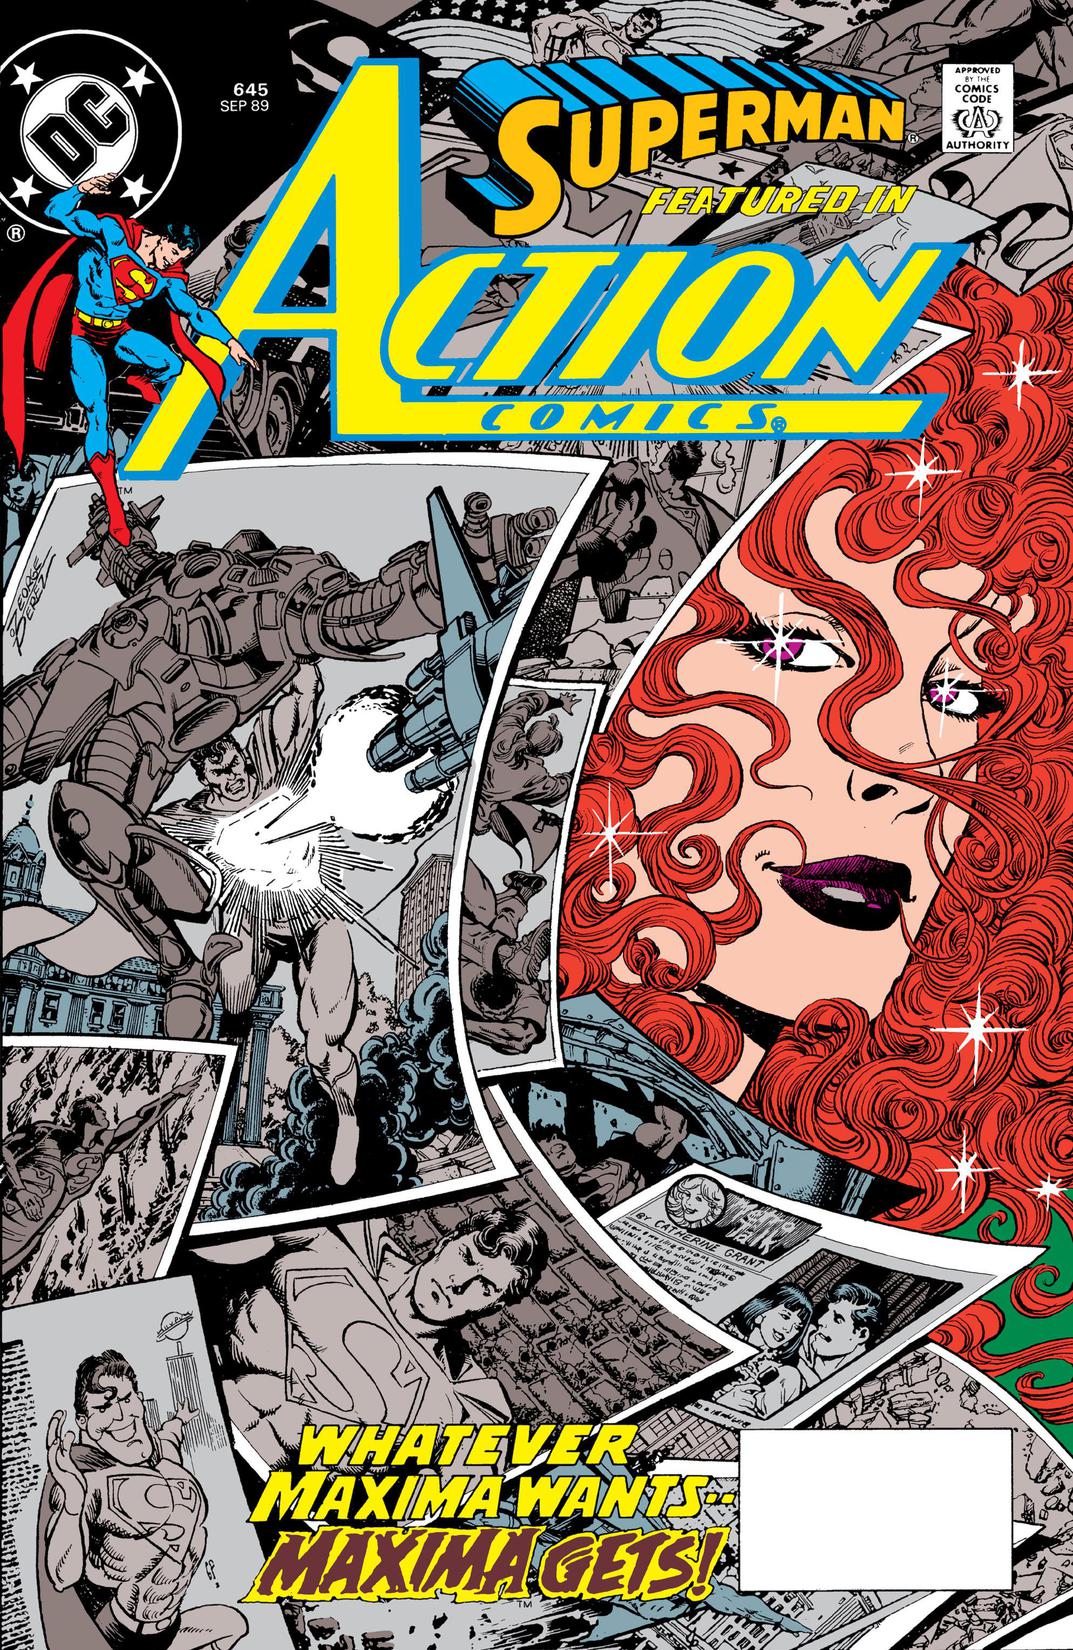 Action Comics (1938-2011) #645 preview images